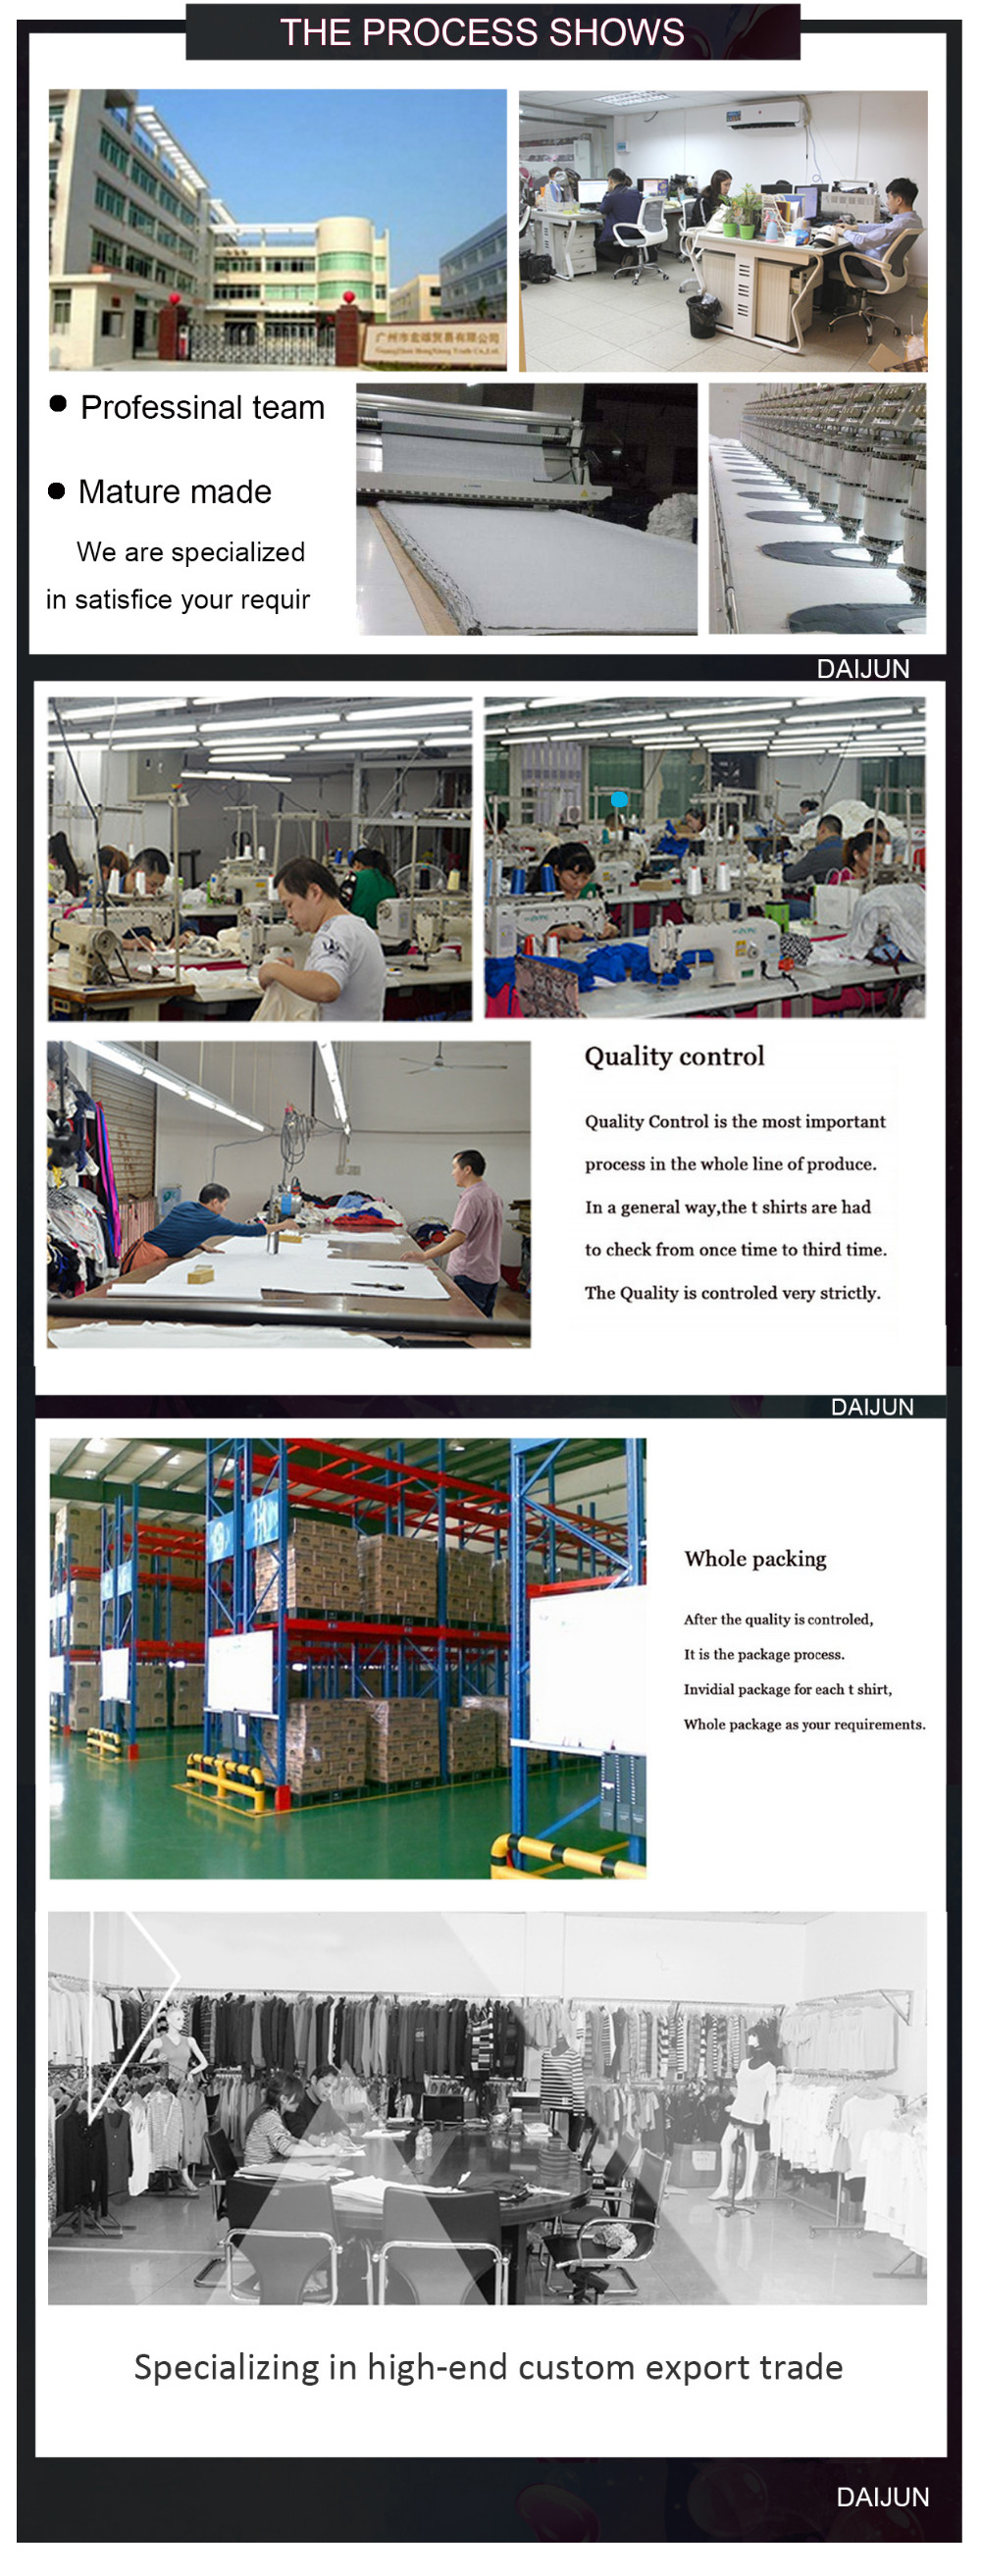 Daijun oem新デザイン高品質100%綿グレーメンズボードショーツ仕入れ・メーカー・工場